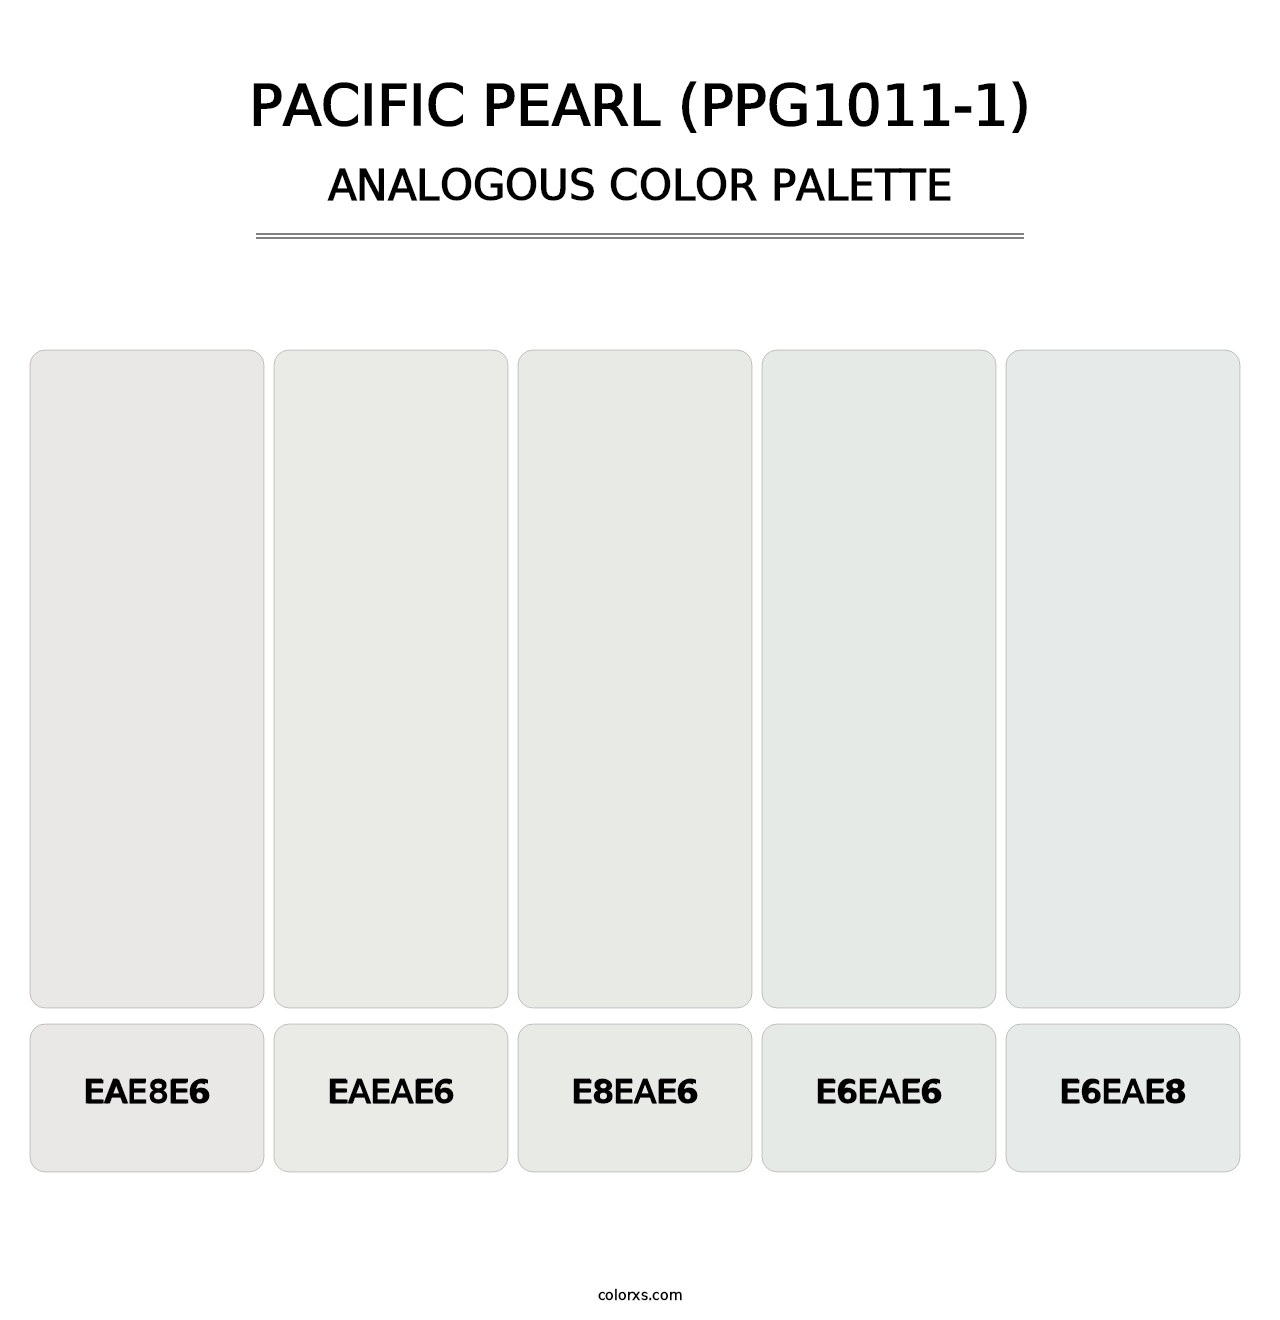 Pacific Pearl (PPG1011-1) - Analogous Color Palette